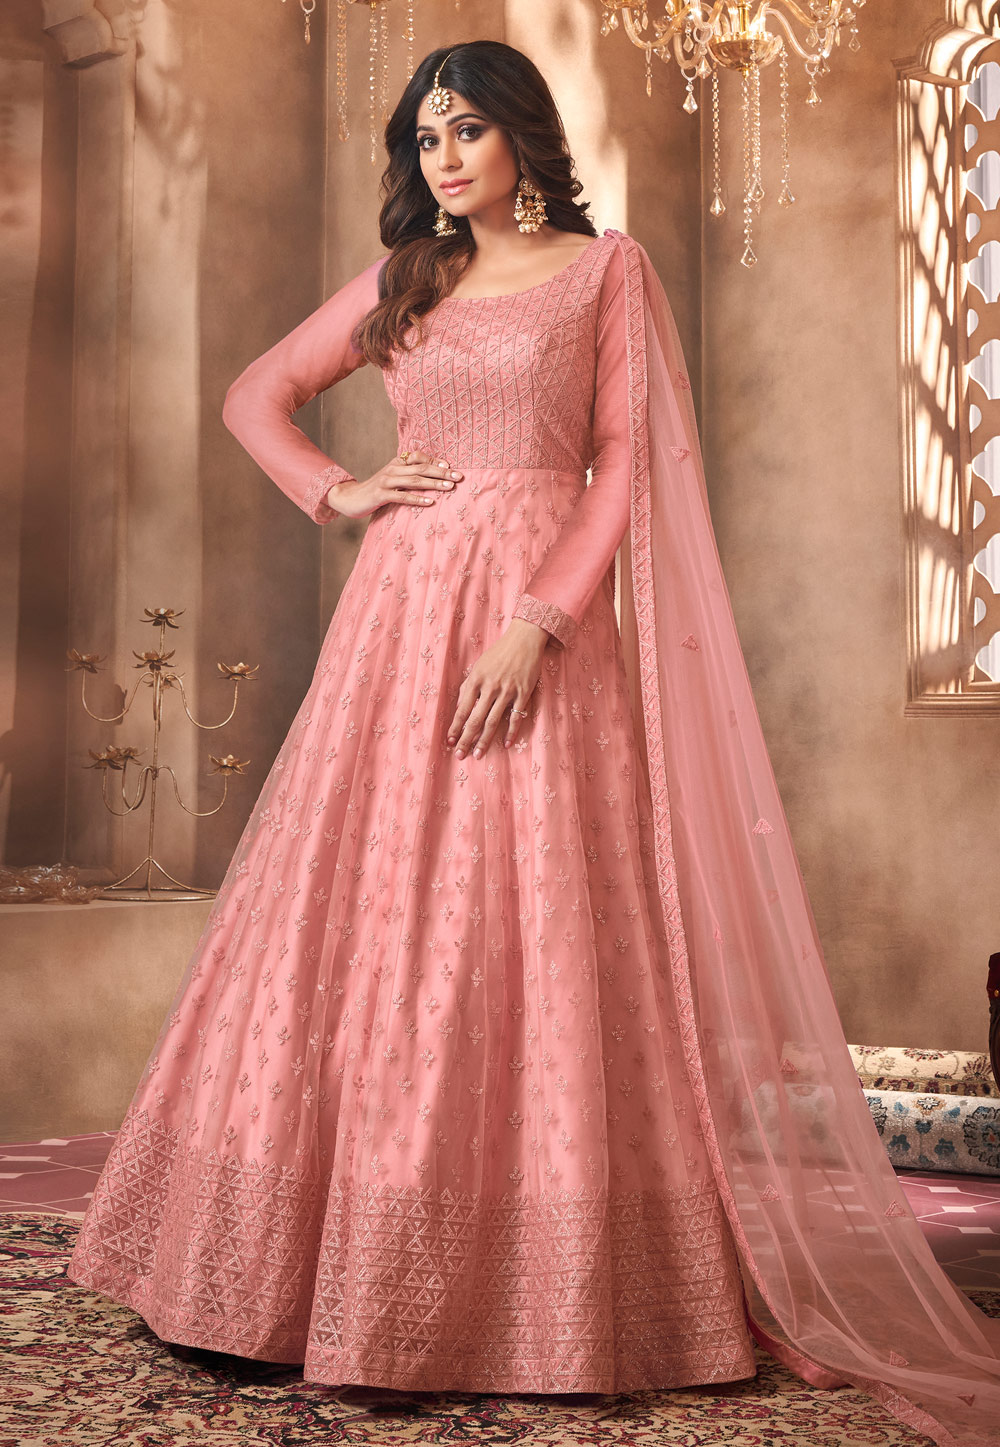 Pakistani Eid New Wedding Indian Bridal Anarkali Suit Dress Bollywood Party  Gown | eBay